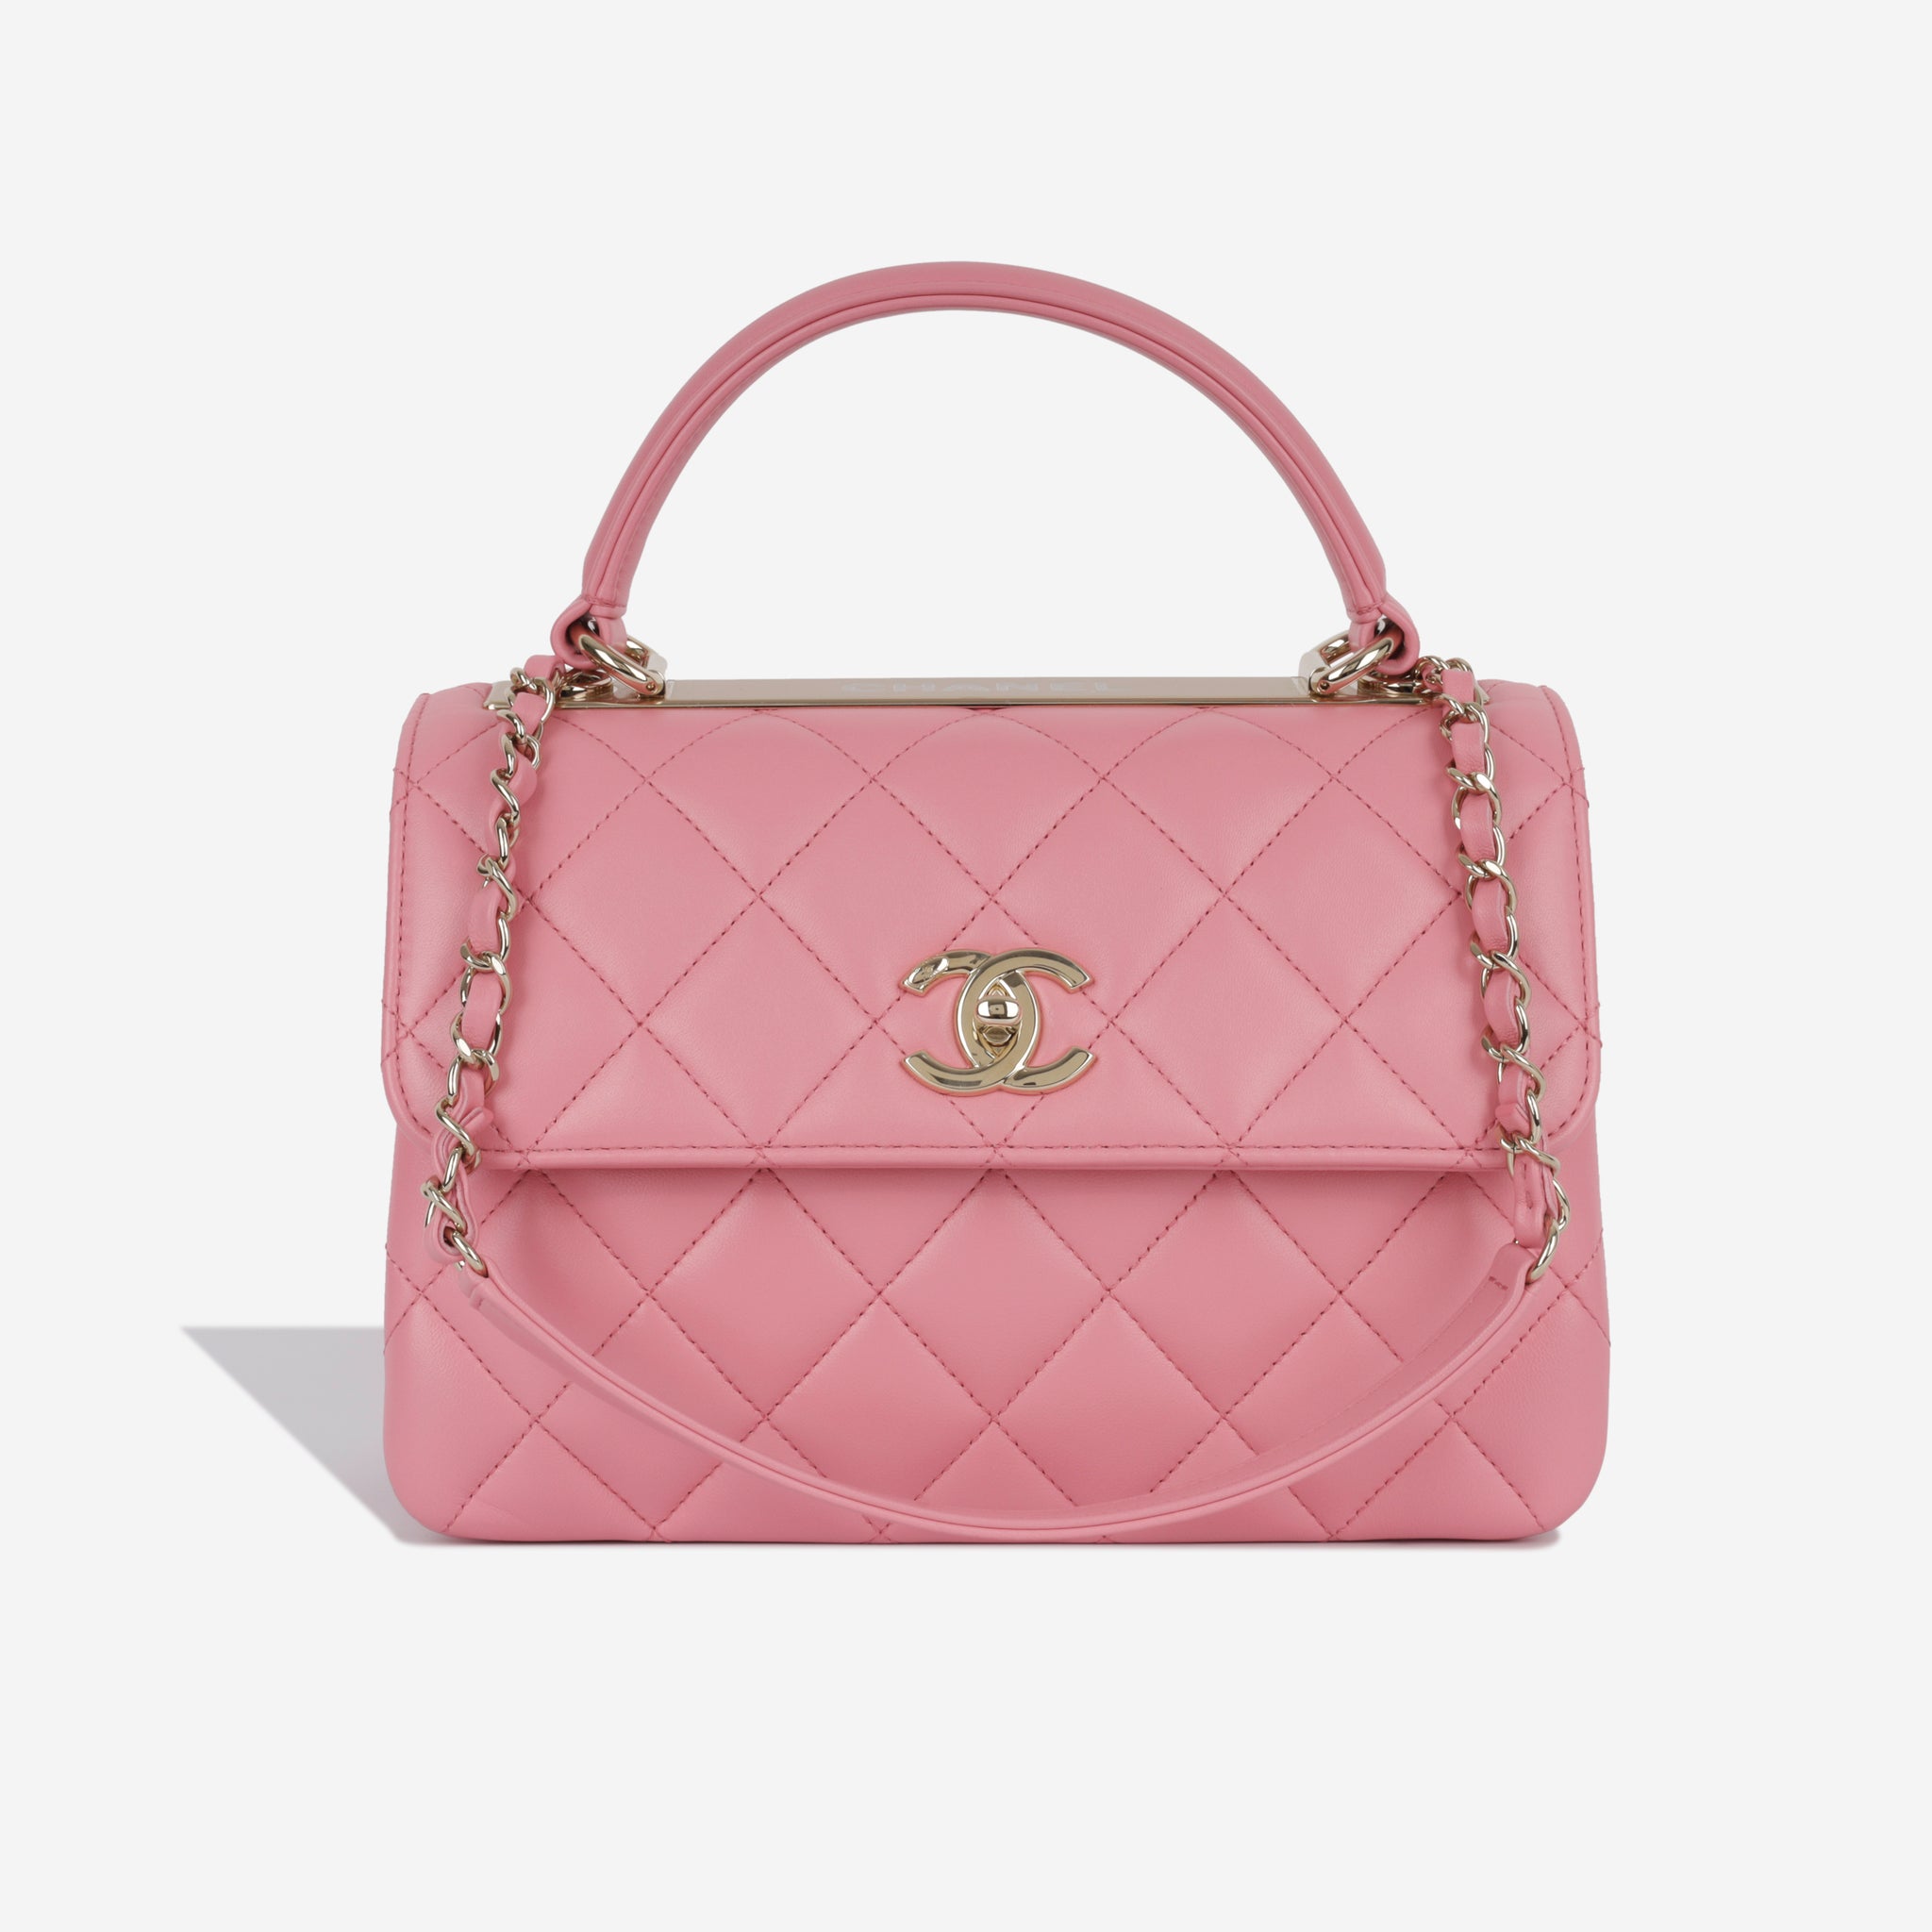 pink flap bag